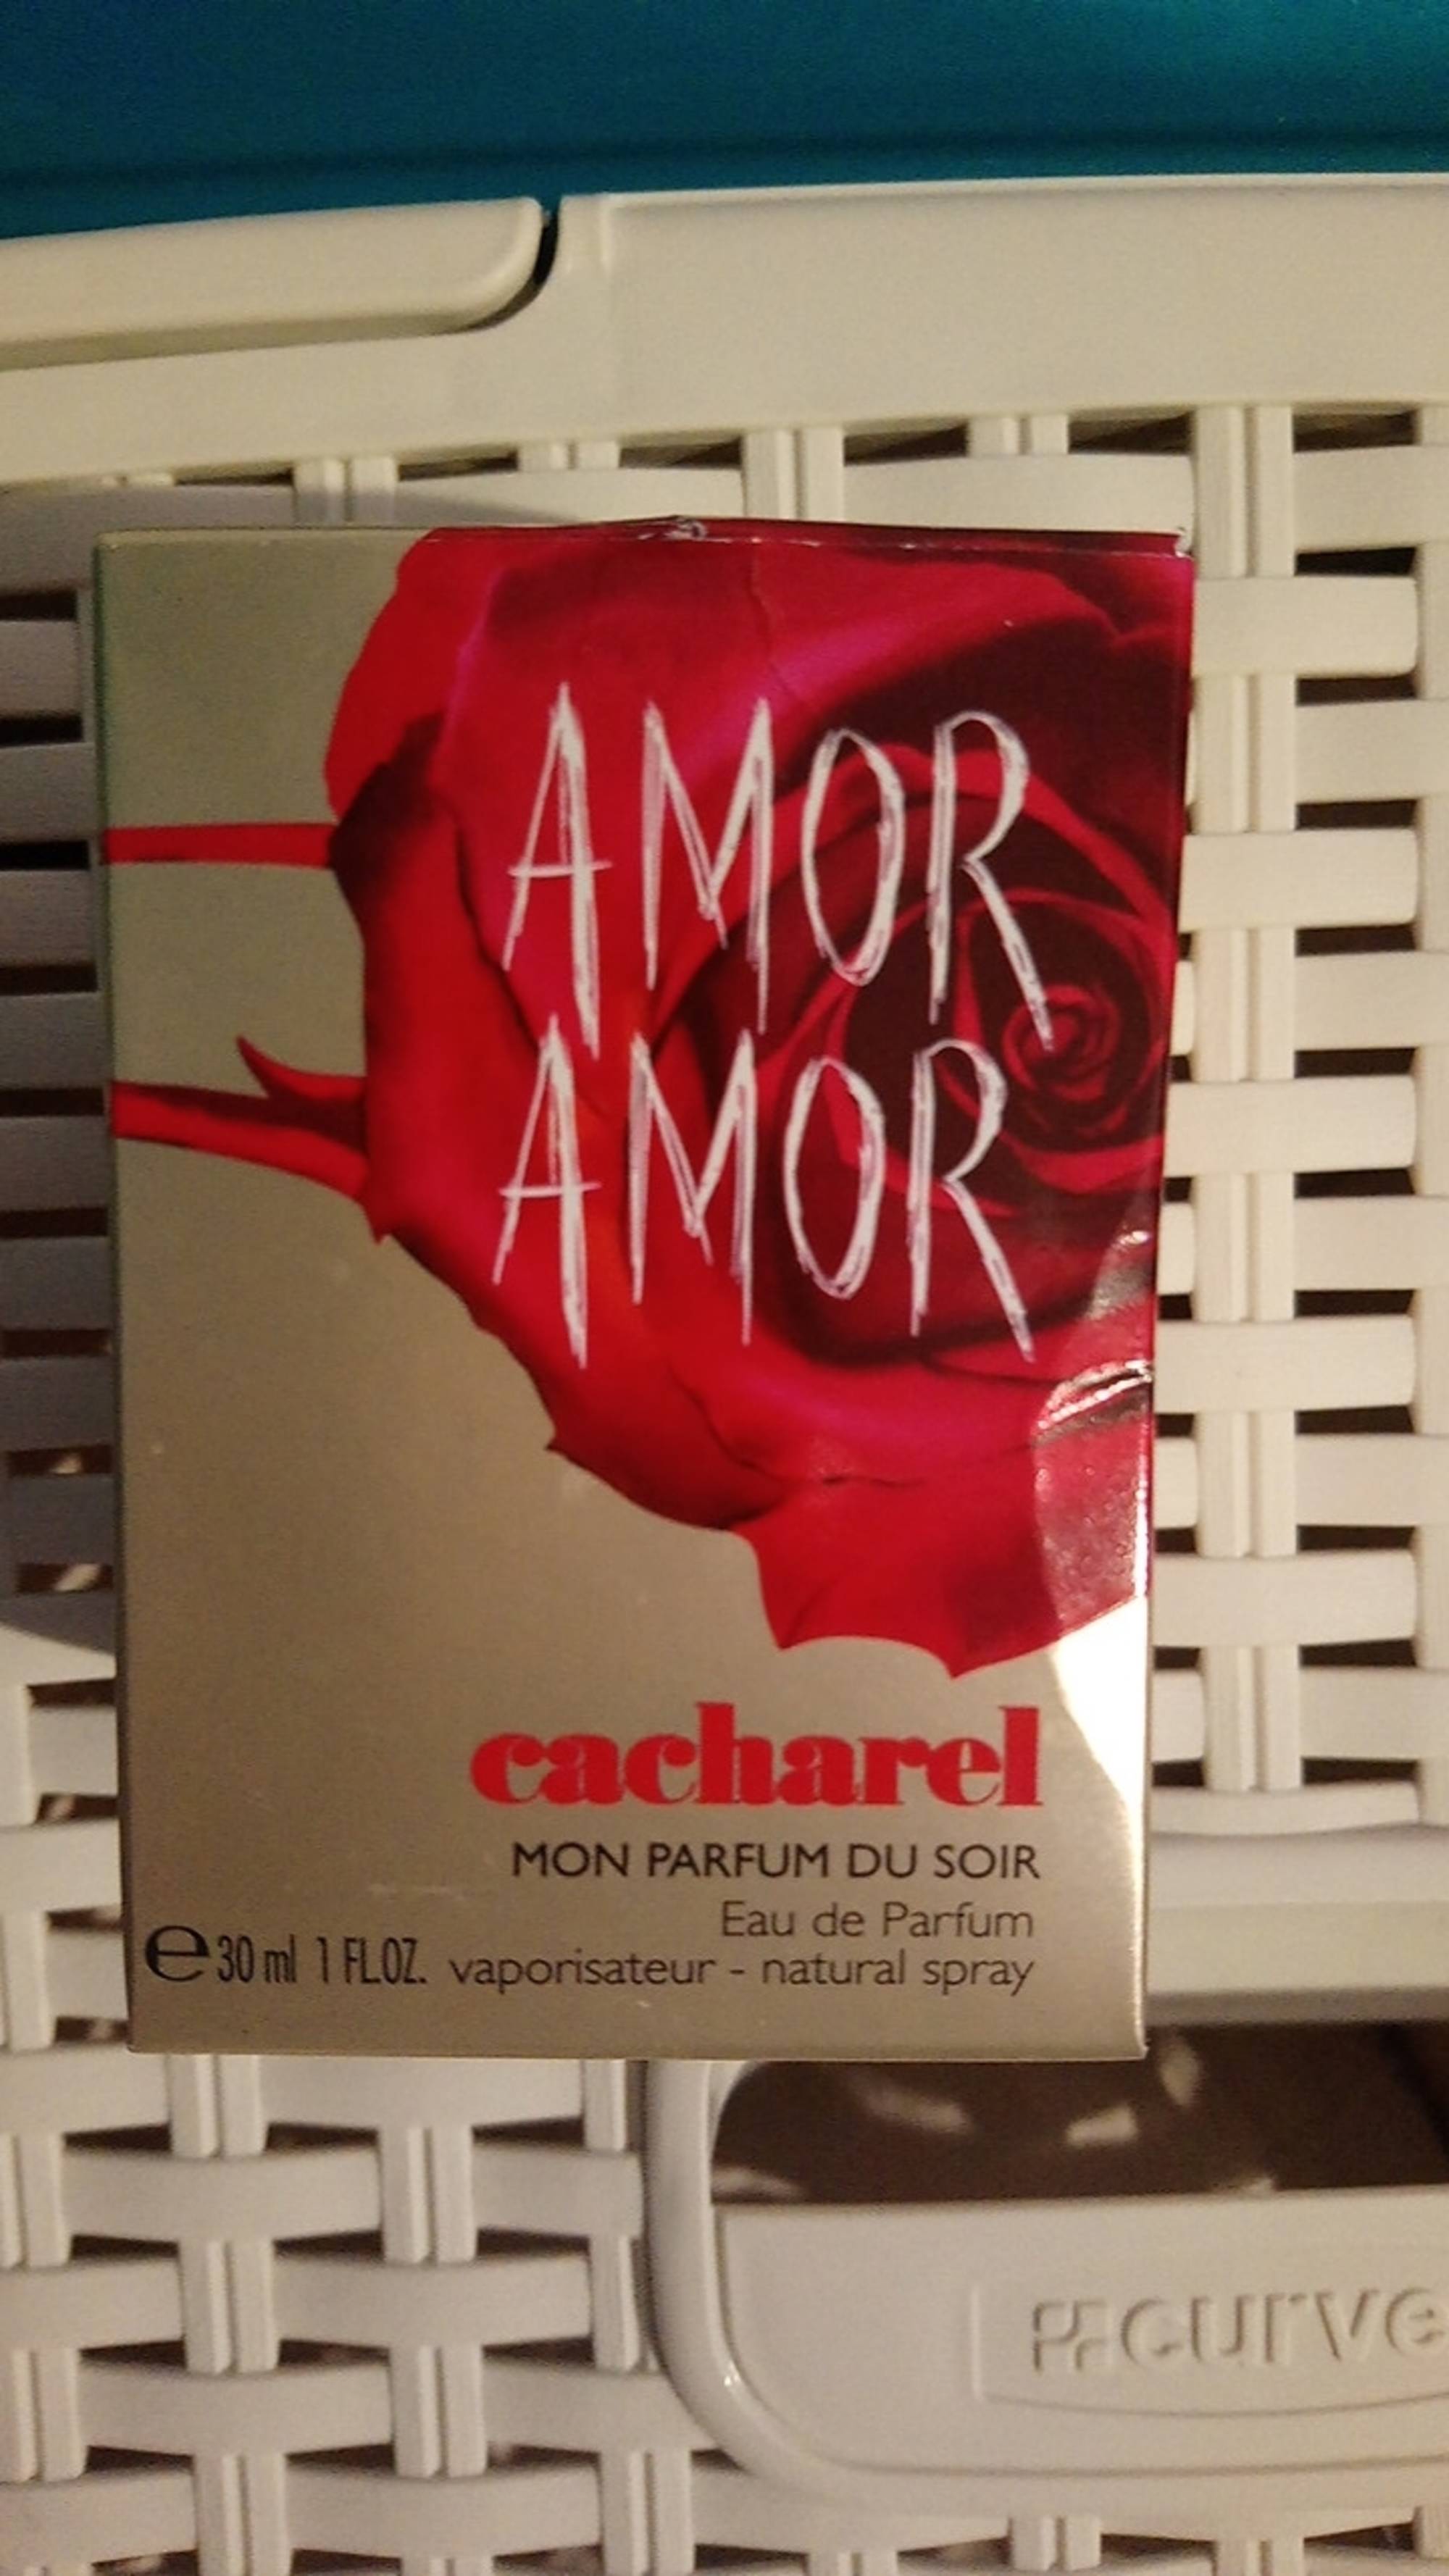 CACHAREL - Amor amor - Mon parfum du soir